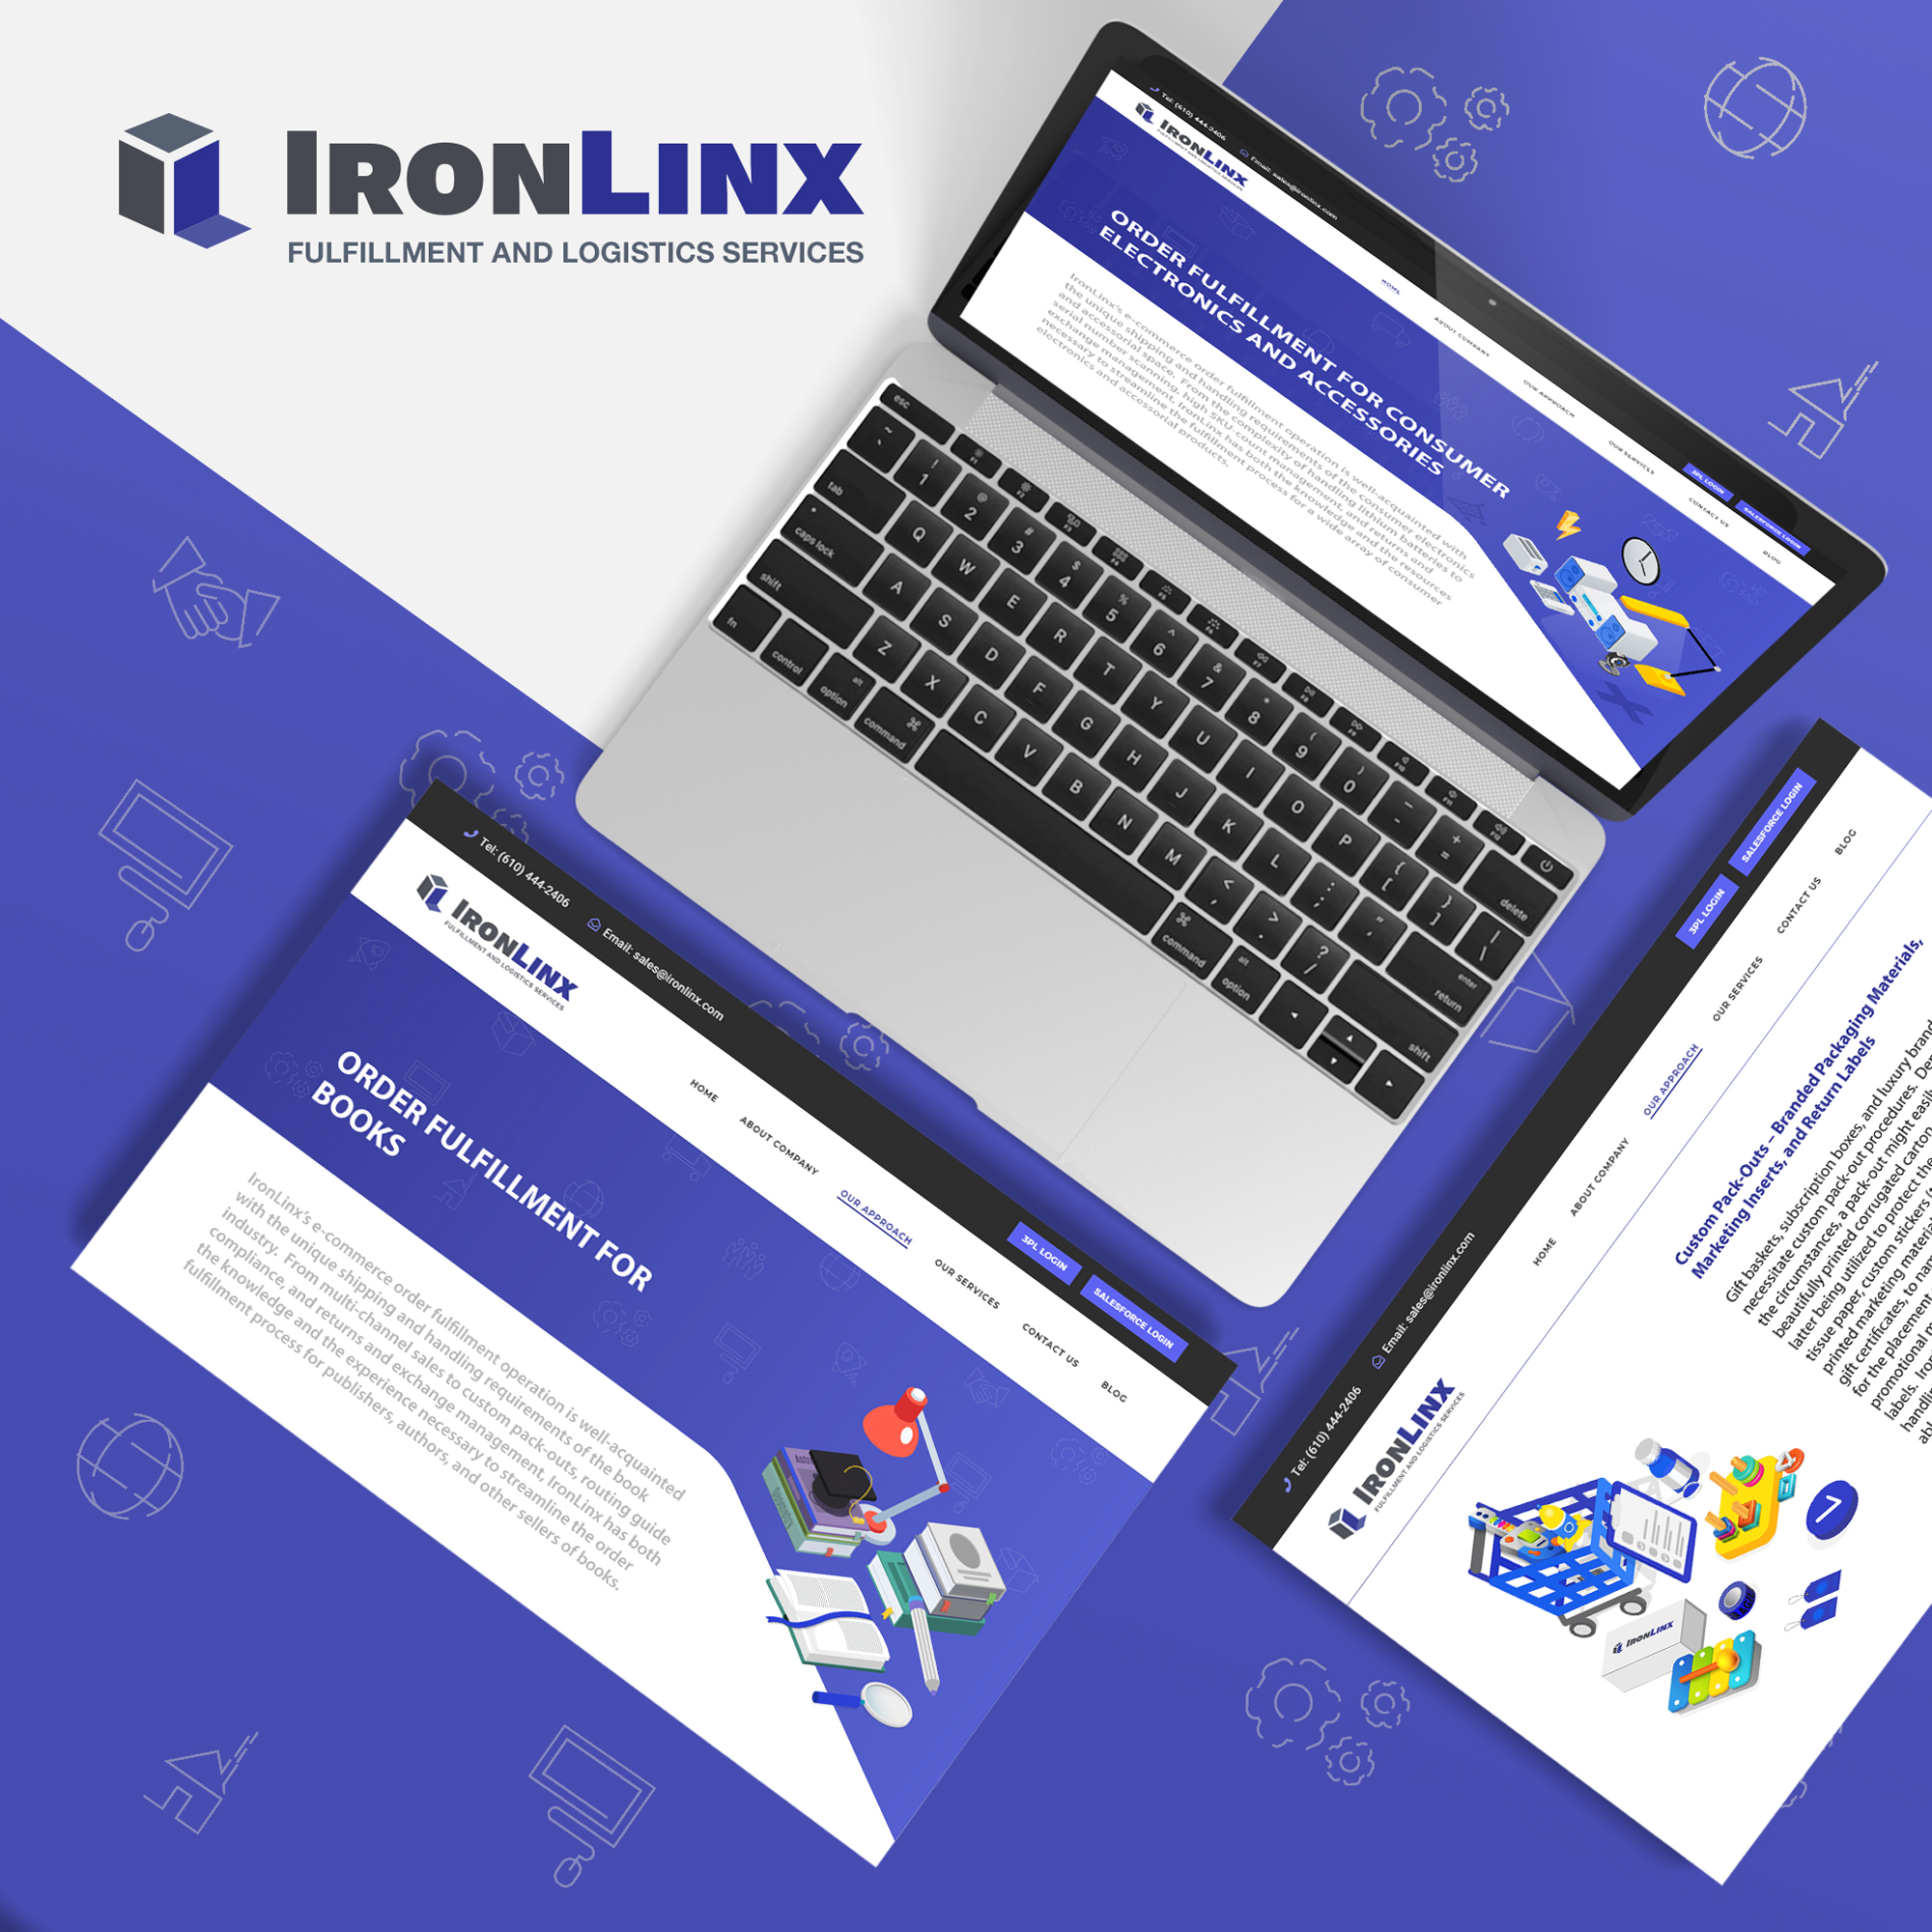 IronLinx.com